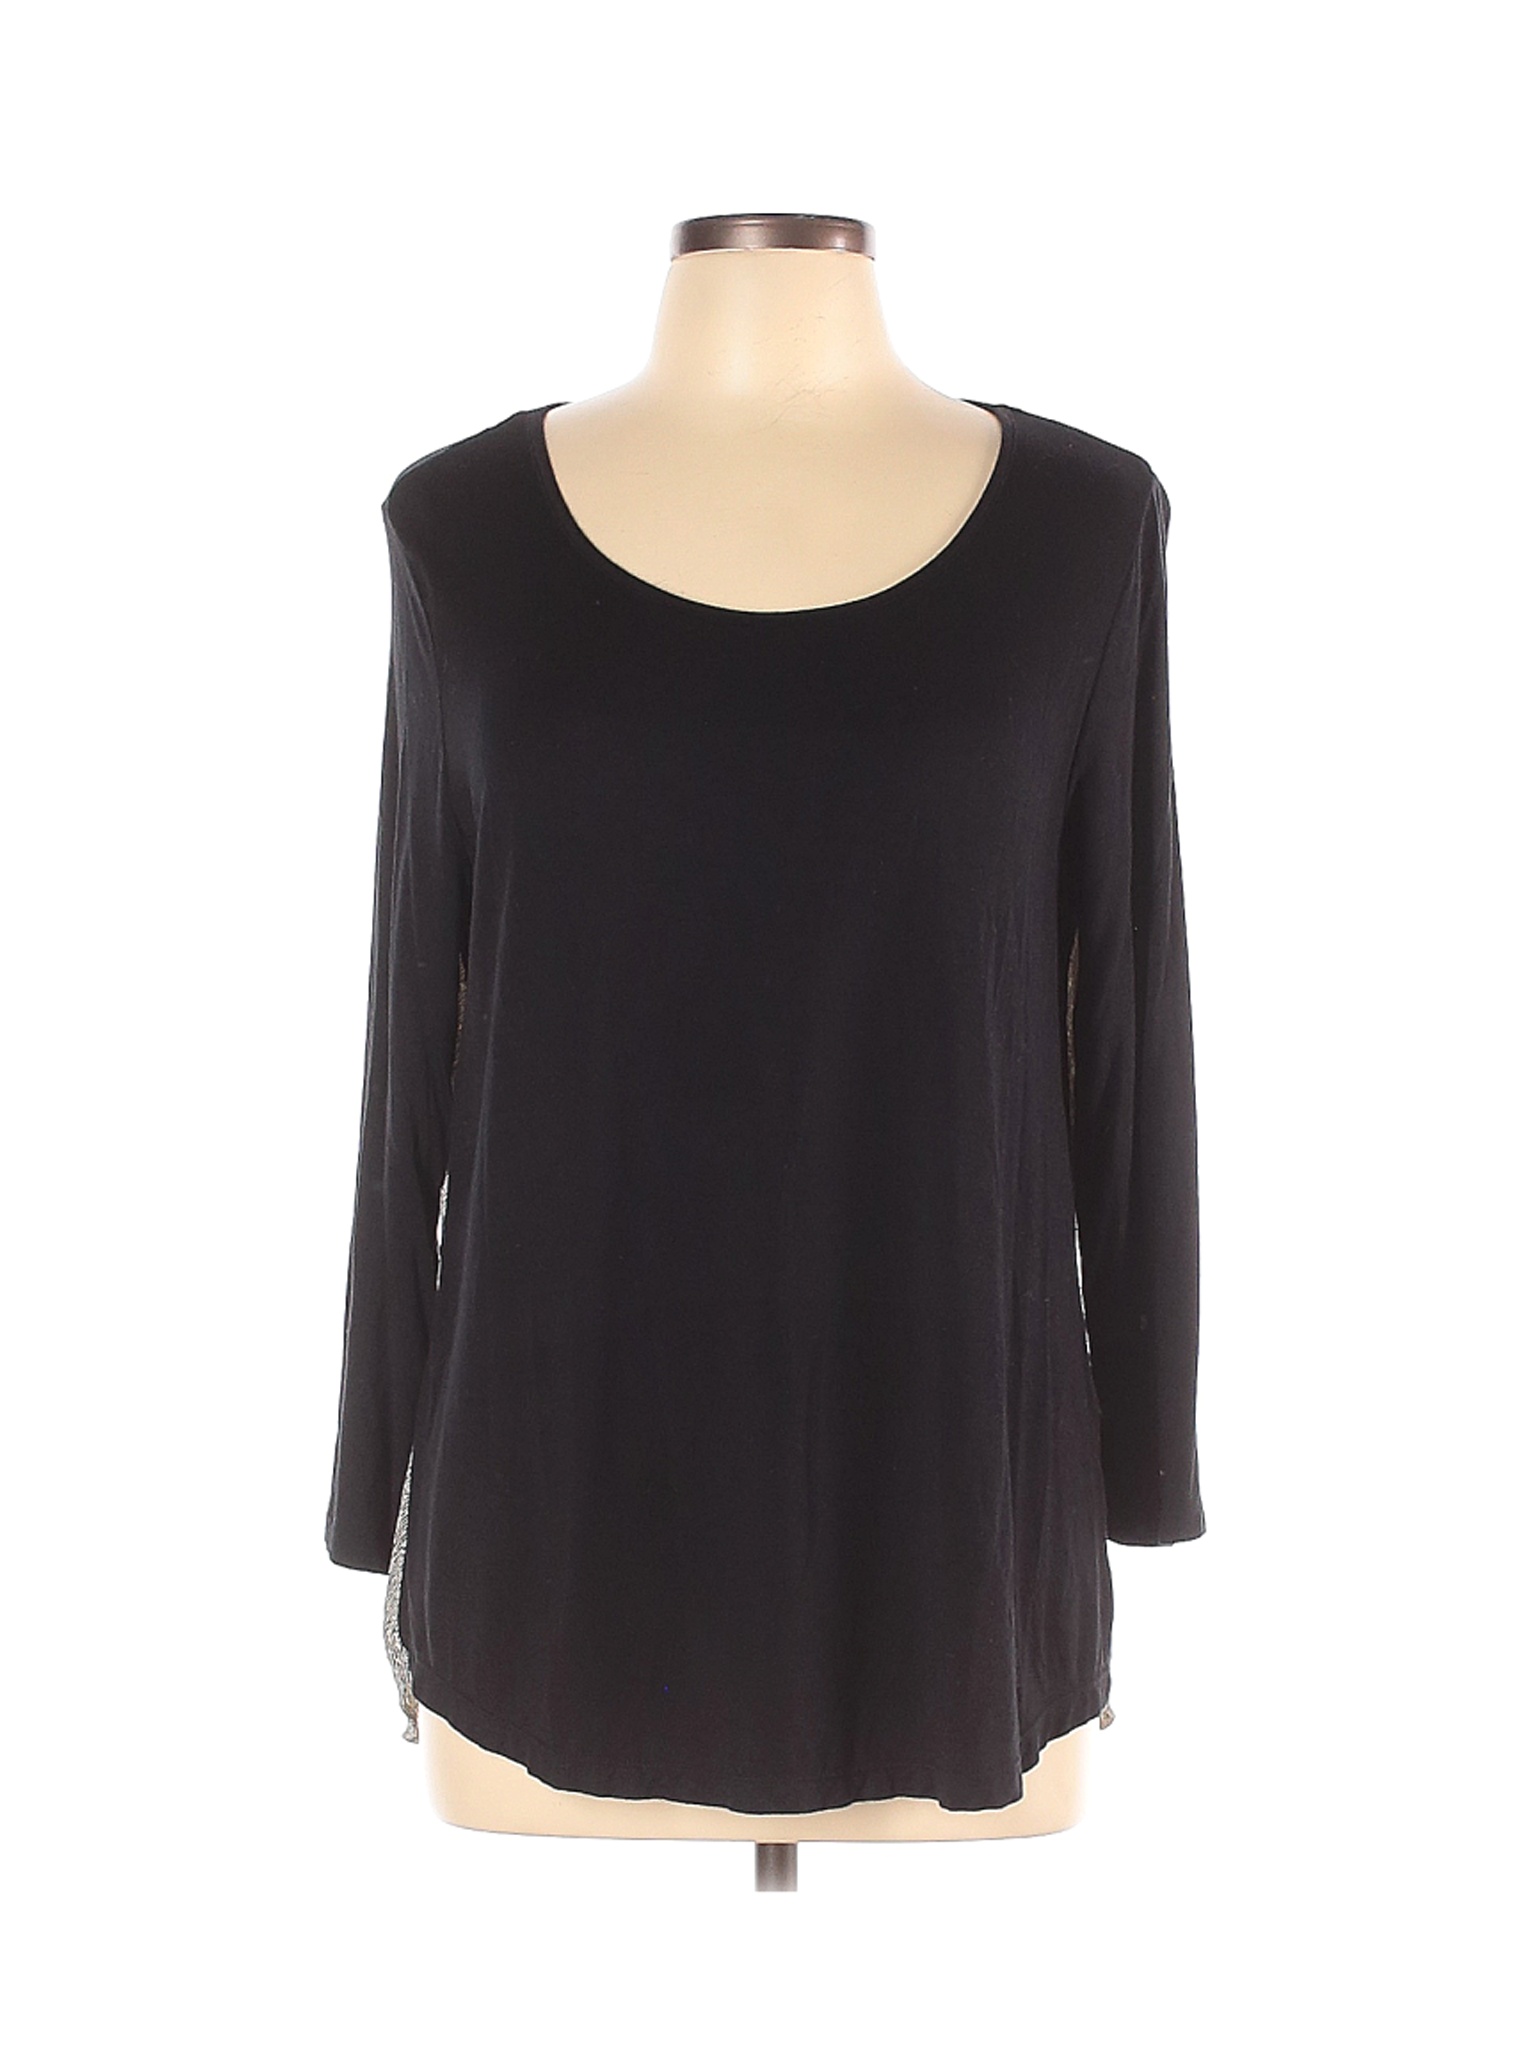 Rose & Olive Women Black Long Sleeve Top L | eBay